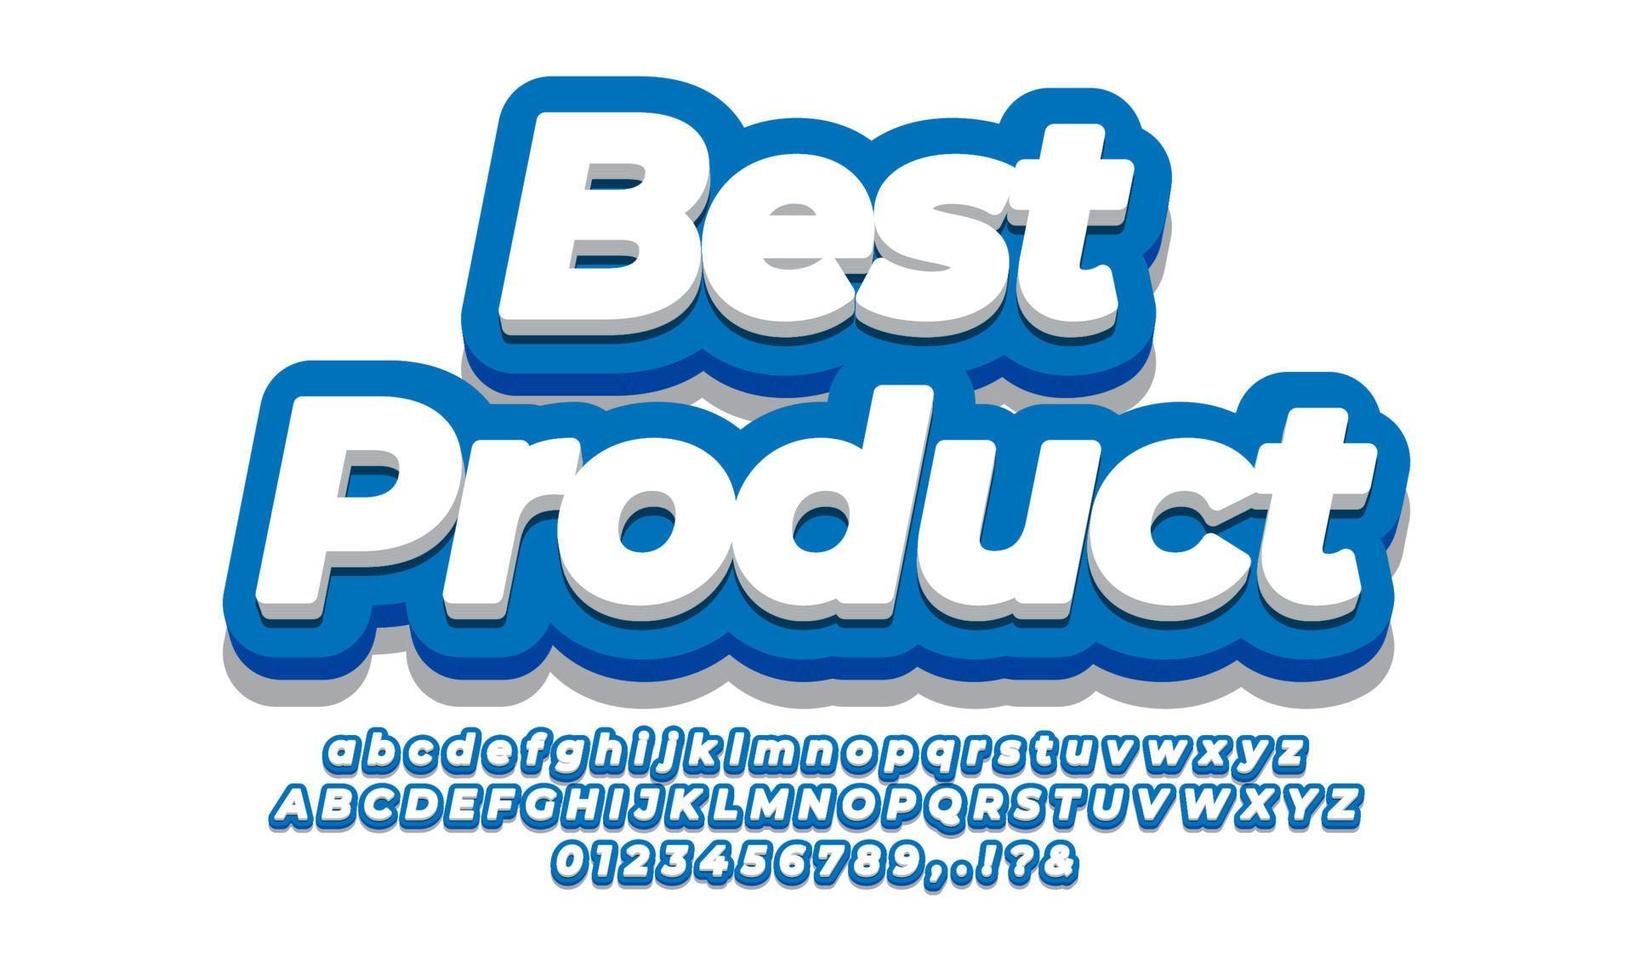 mejor producto venta descuento promoción texto 3d plantilla azul vector